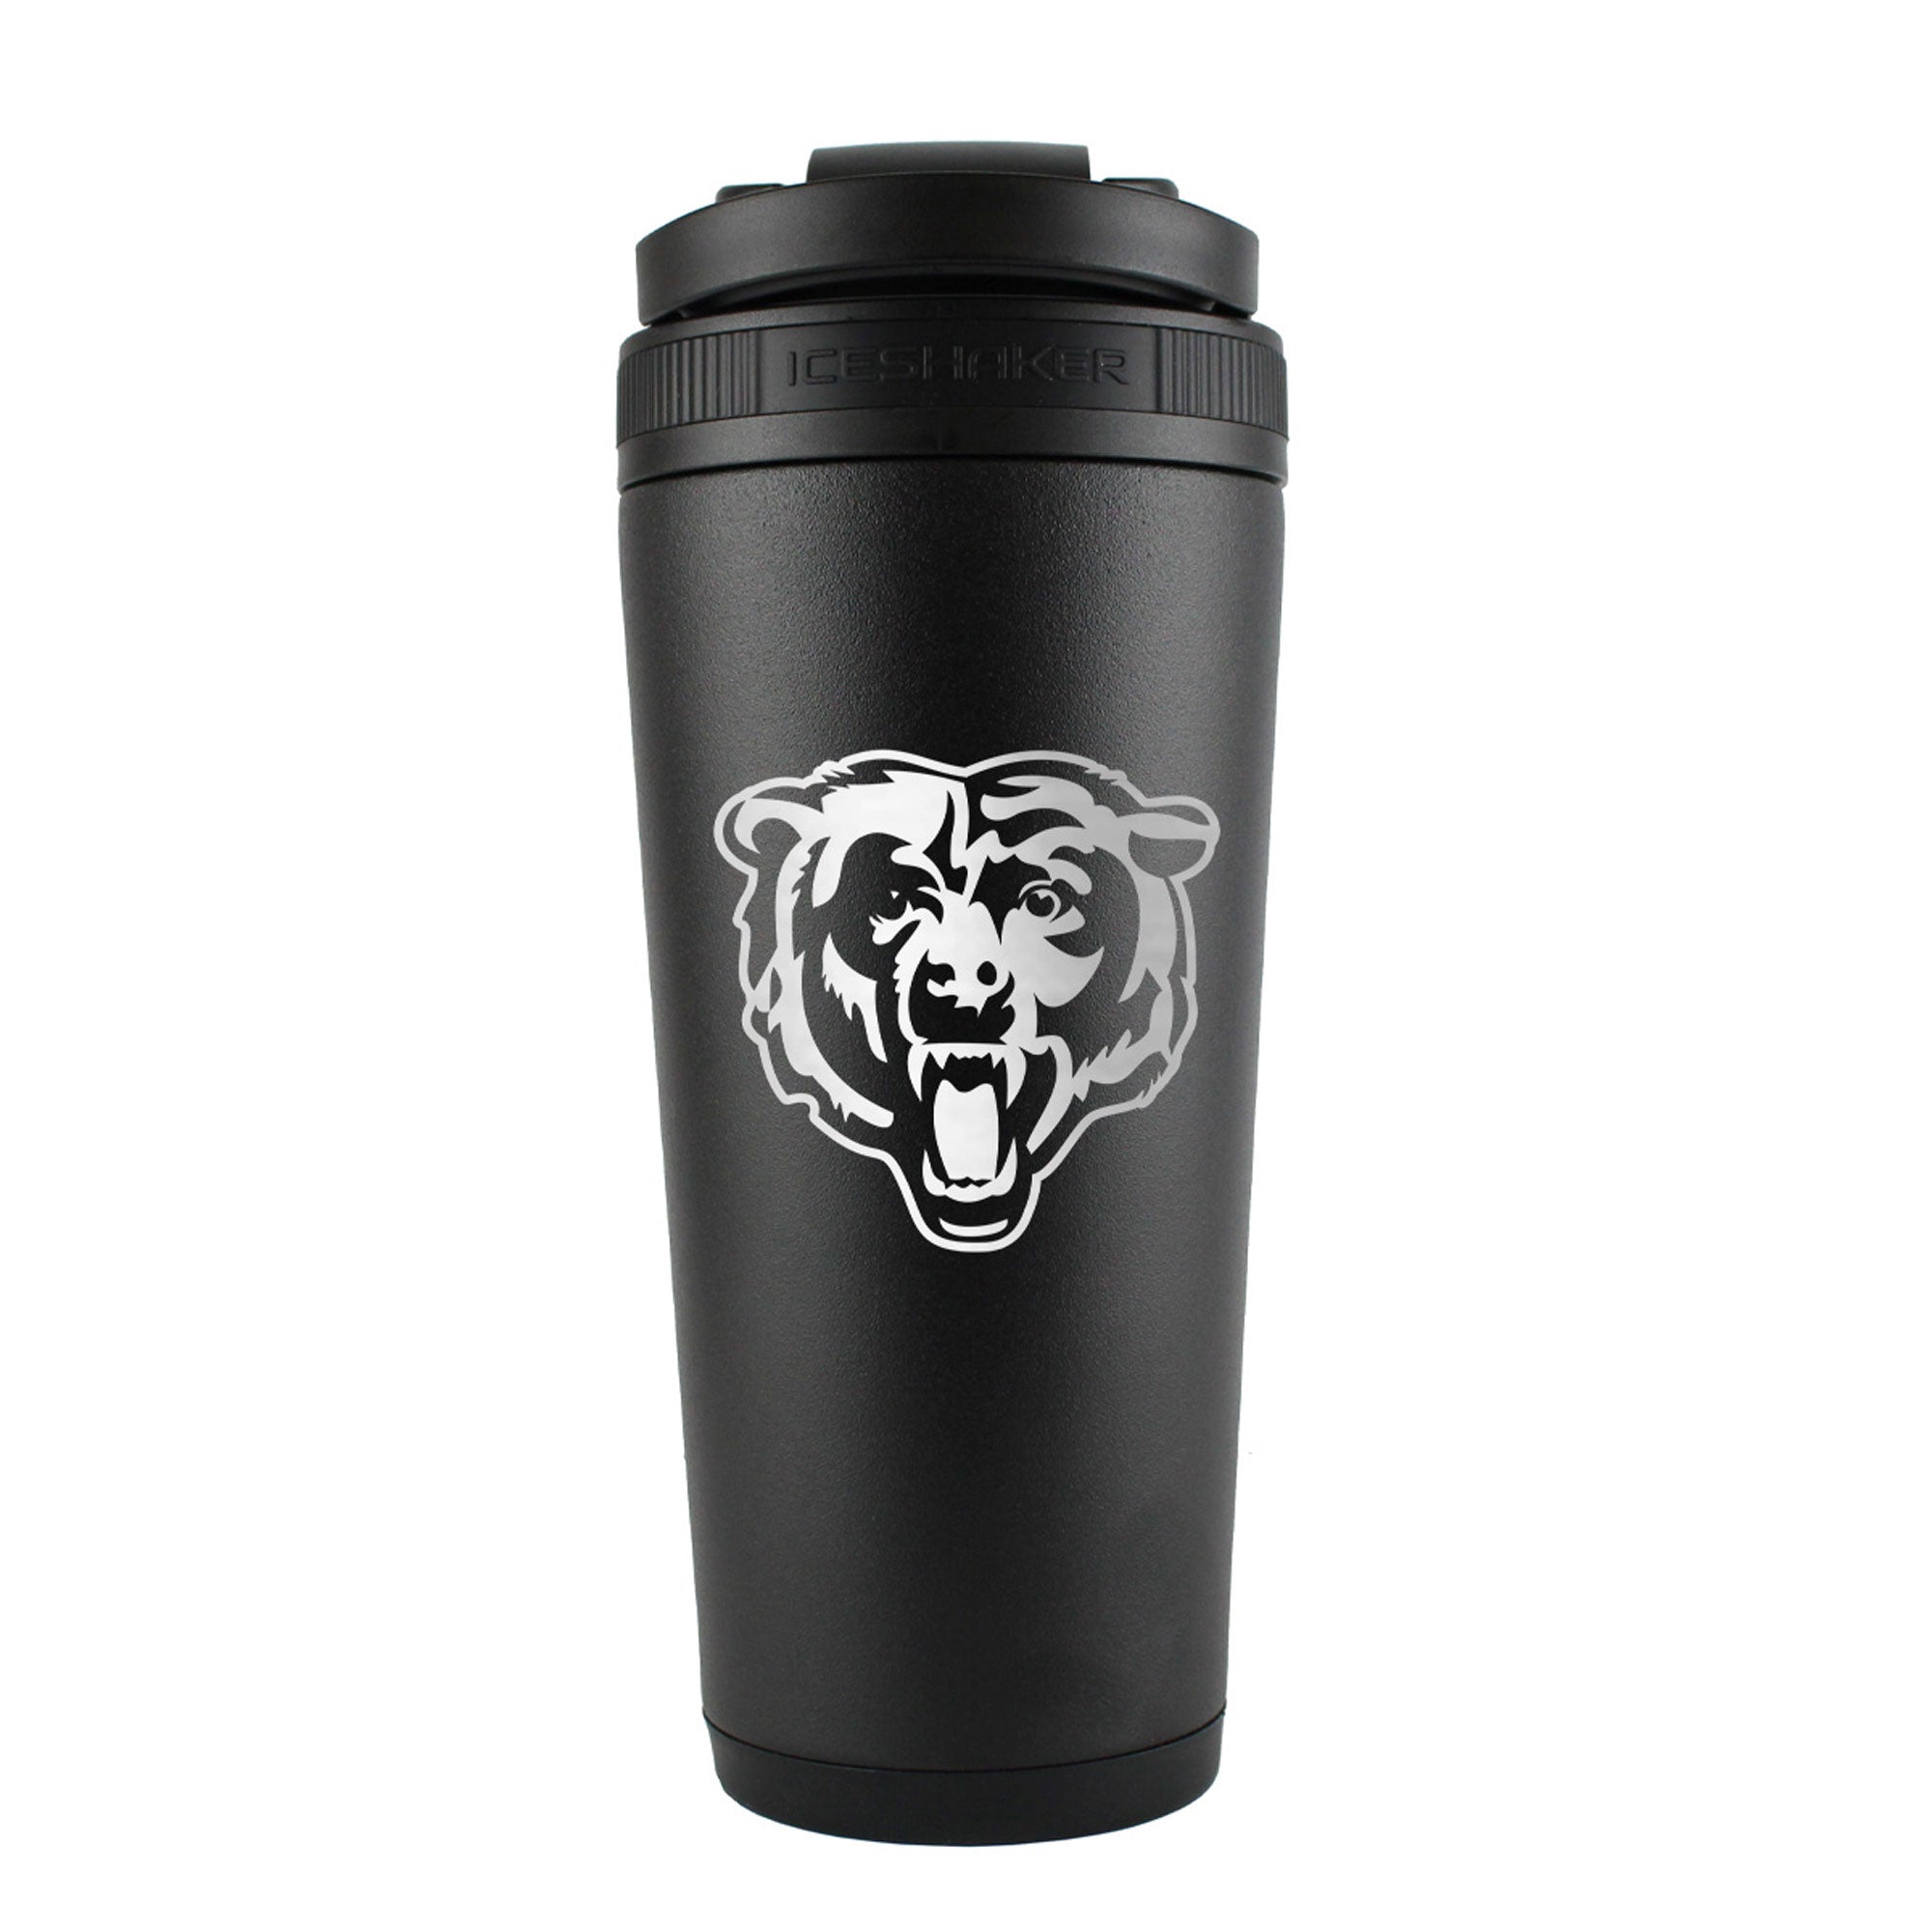 Officially Licensed Chicago Bears 26oz Ice Shaker - Black